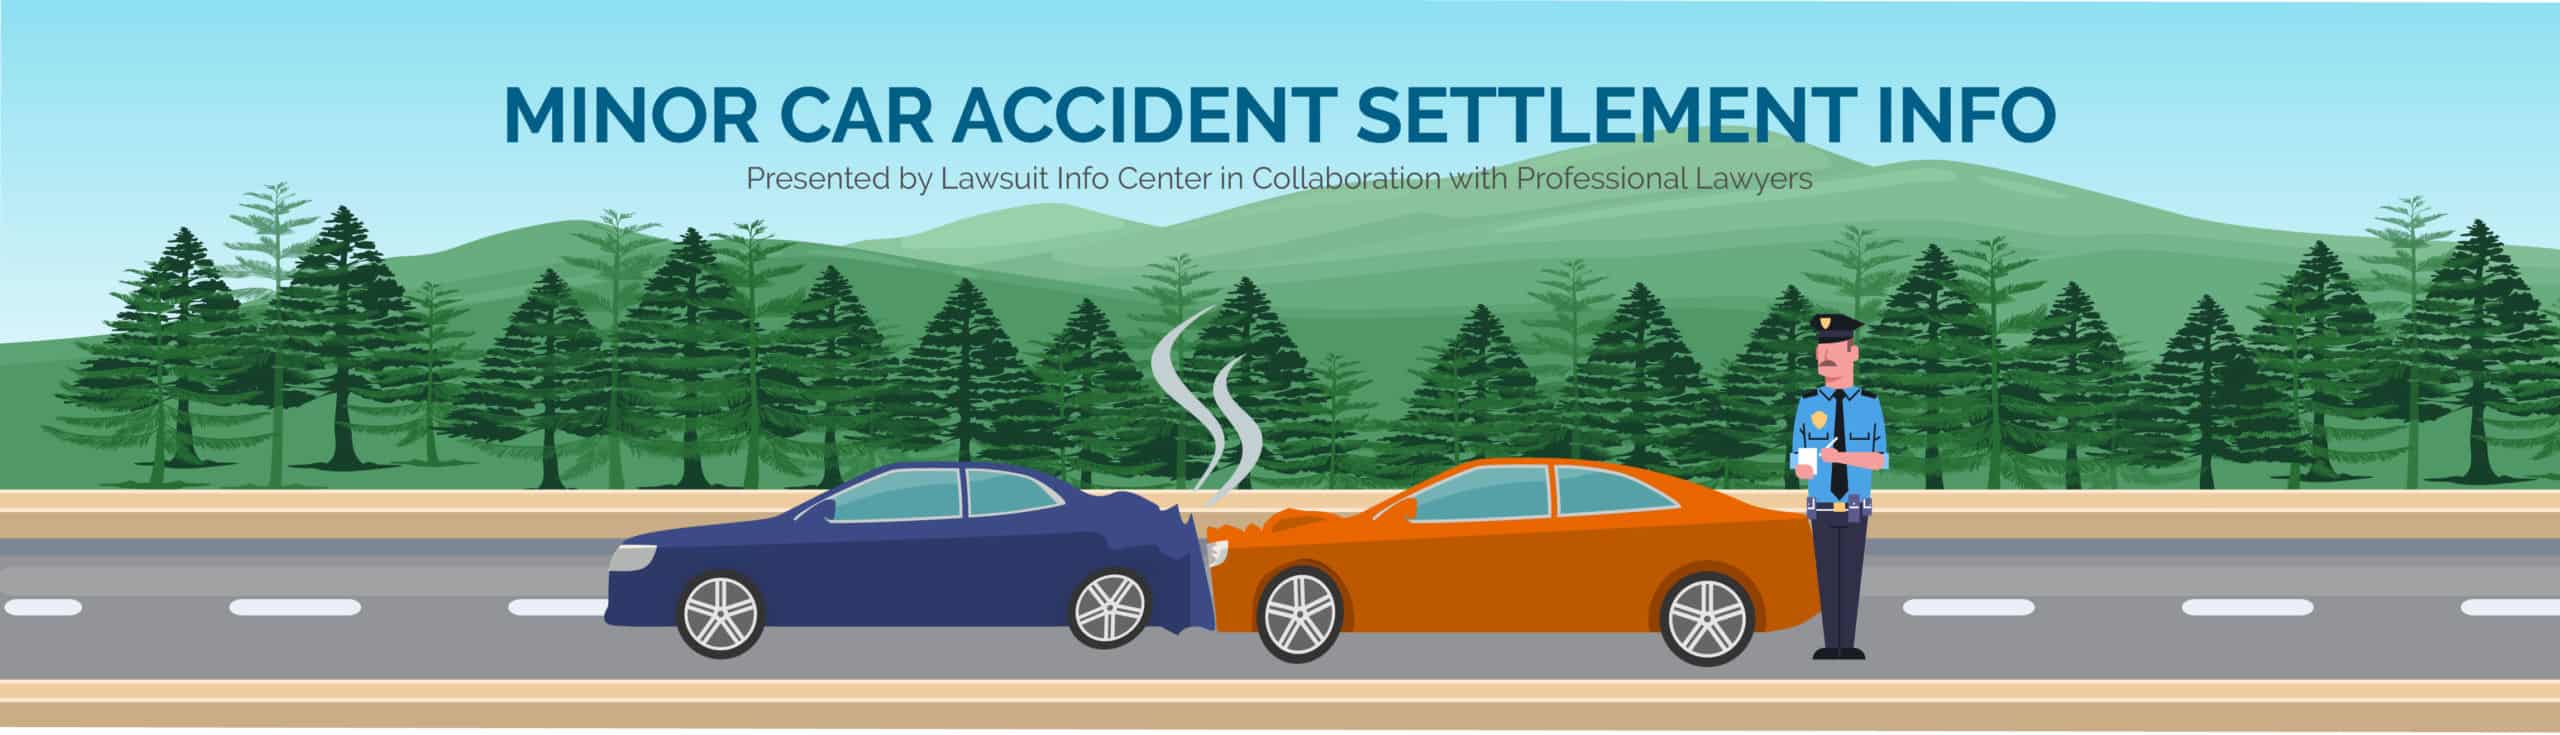 Minor car accident settlement